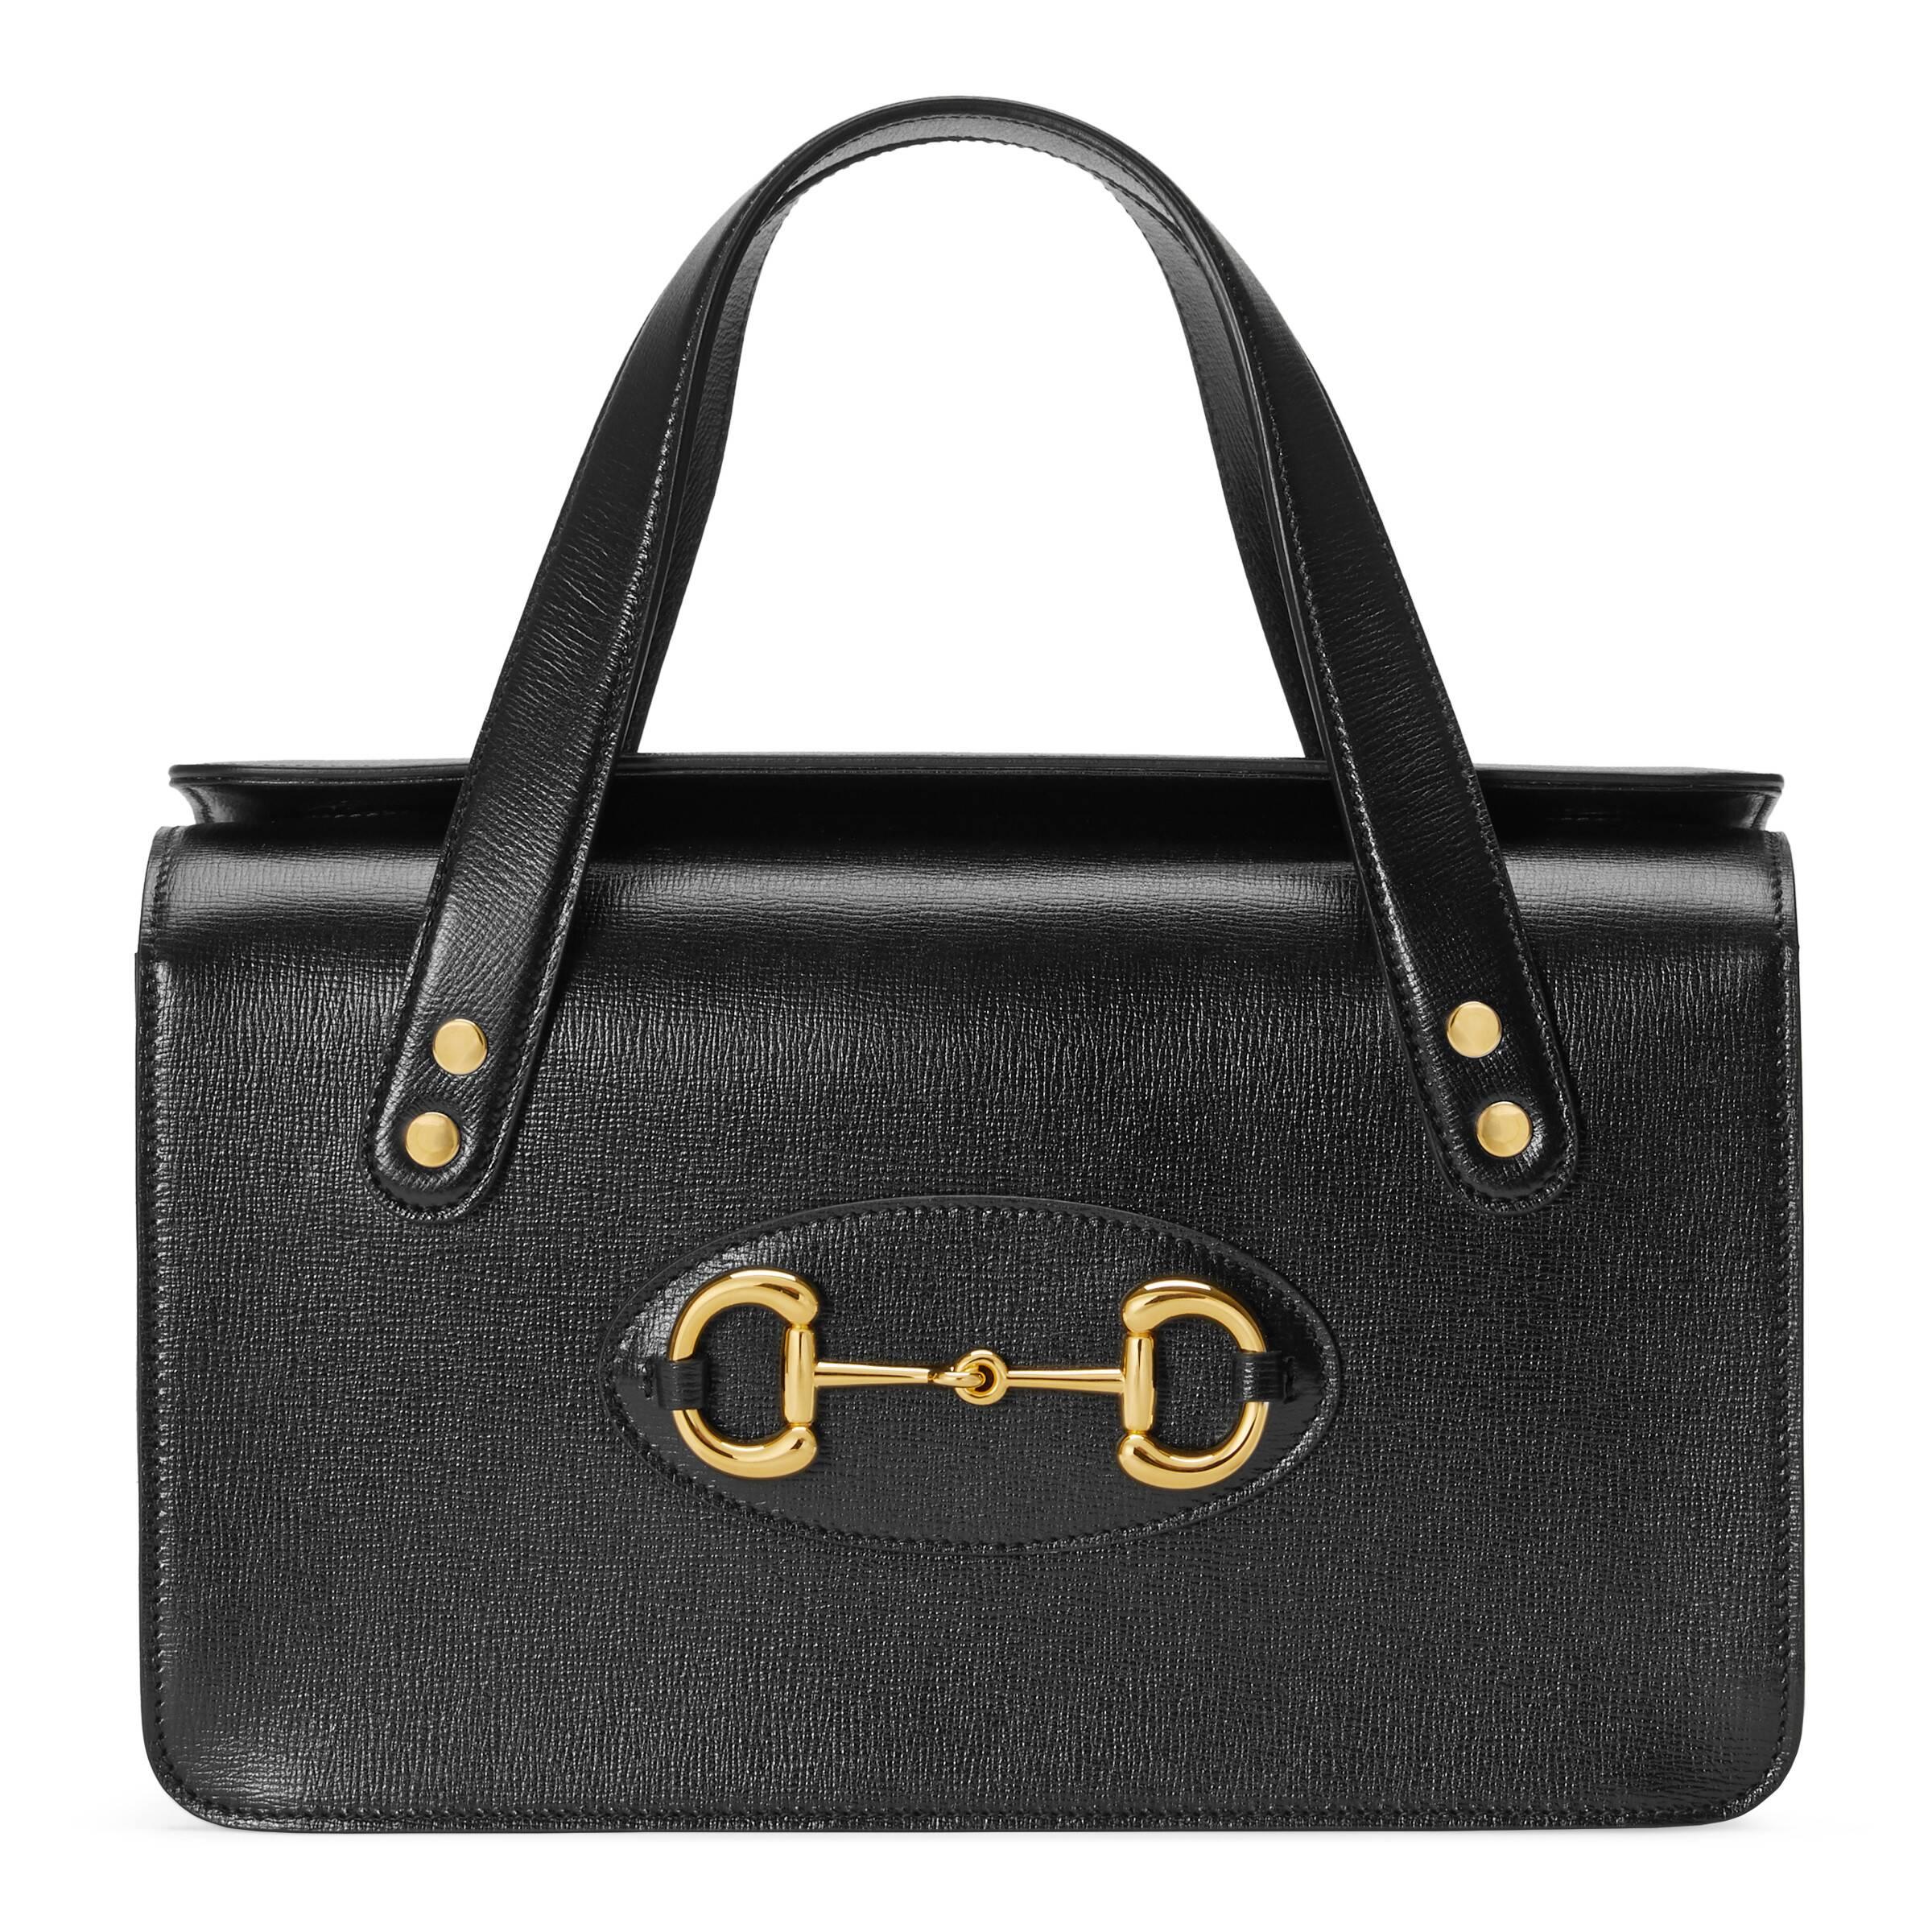 Gucci Horsebit 1955 Small Top Handle Bag in Nero (Black) - Lyst